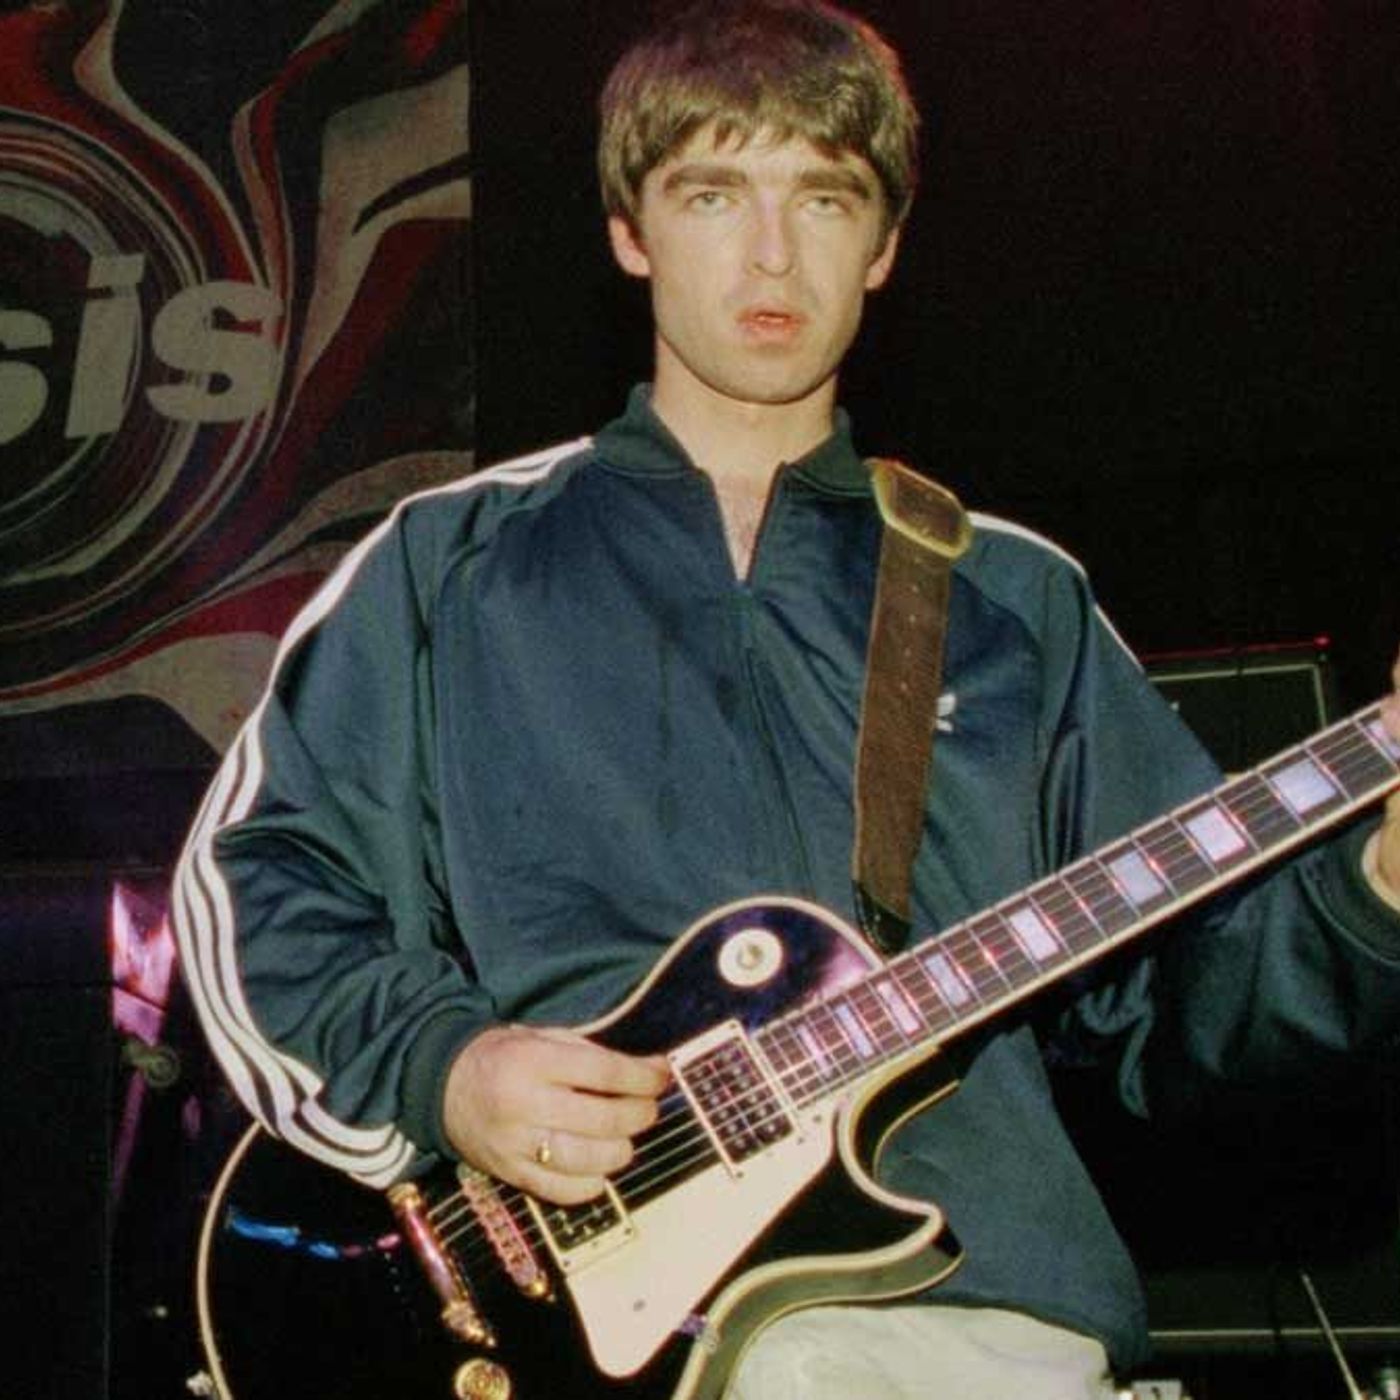 246: Top 10 Oasis Guitar Solos!